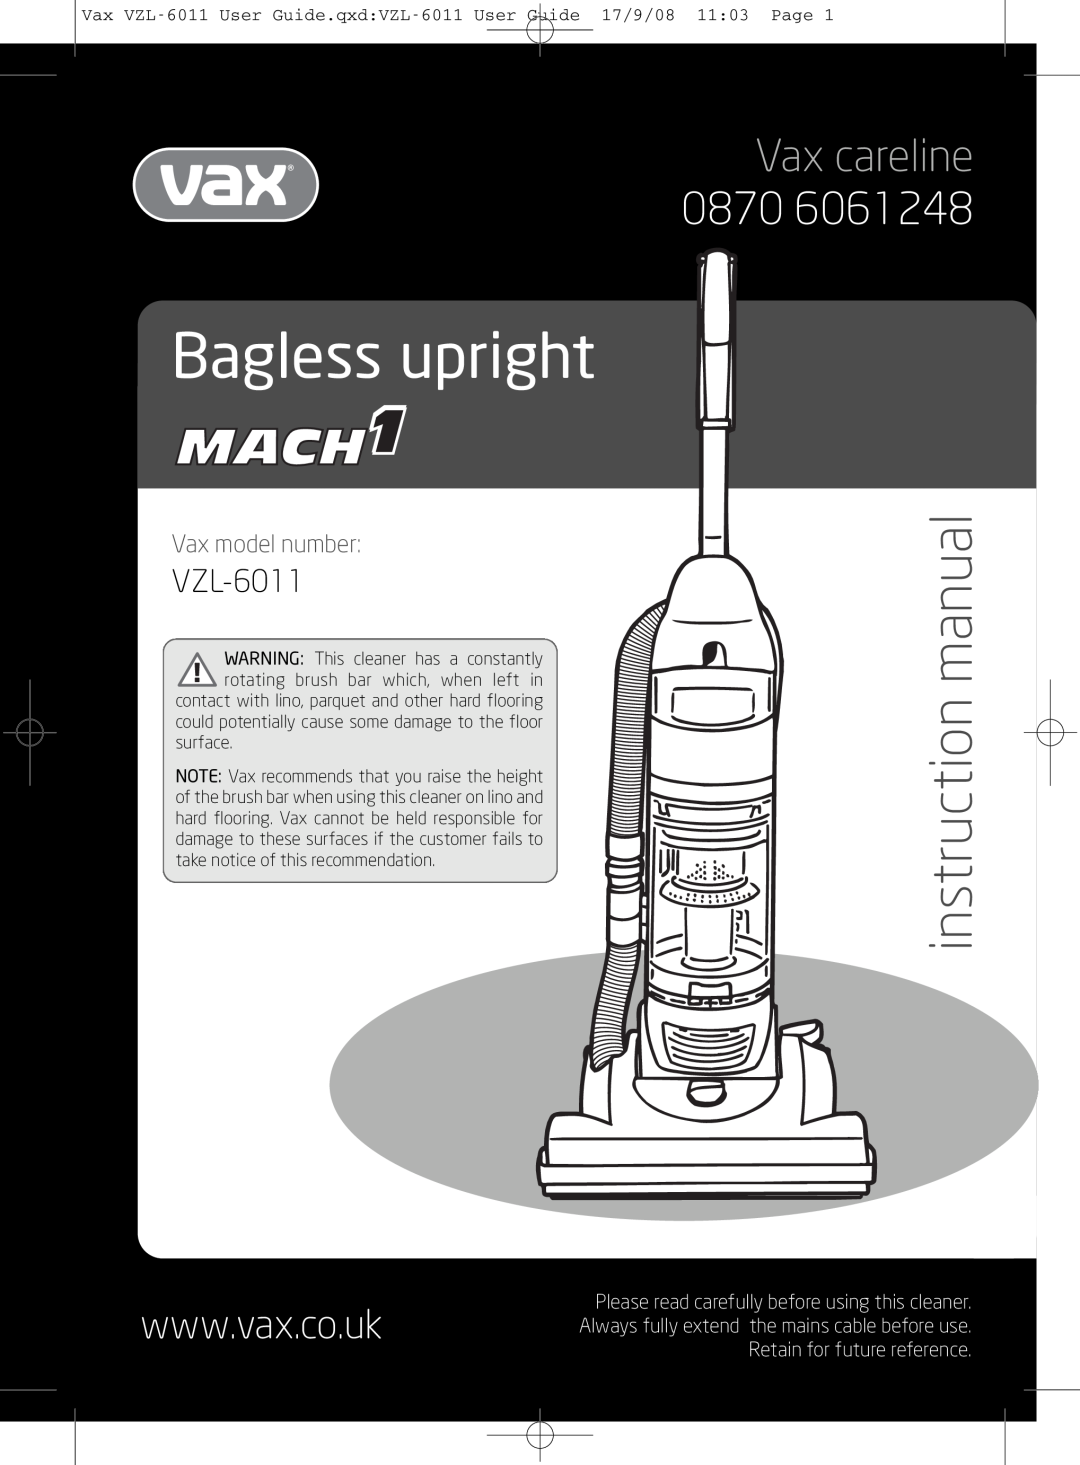 Vizio VZL-6011 instruction manual Bagless upright, Vax careline, Vax model number 